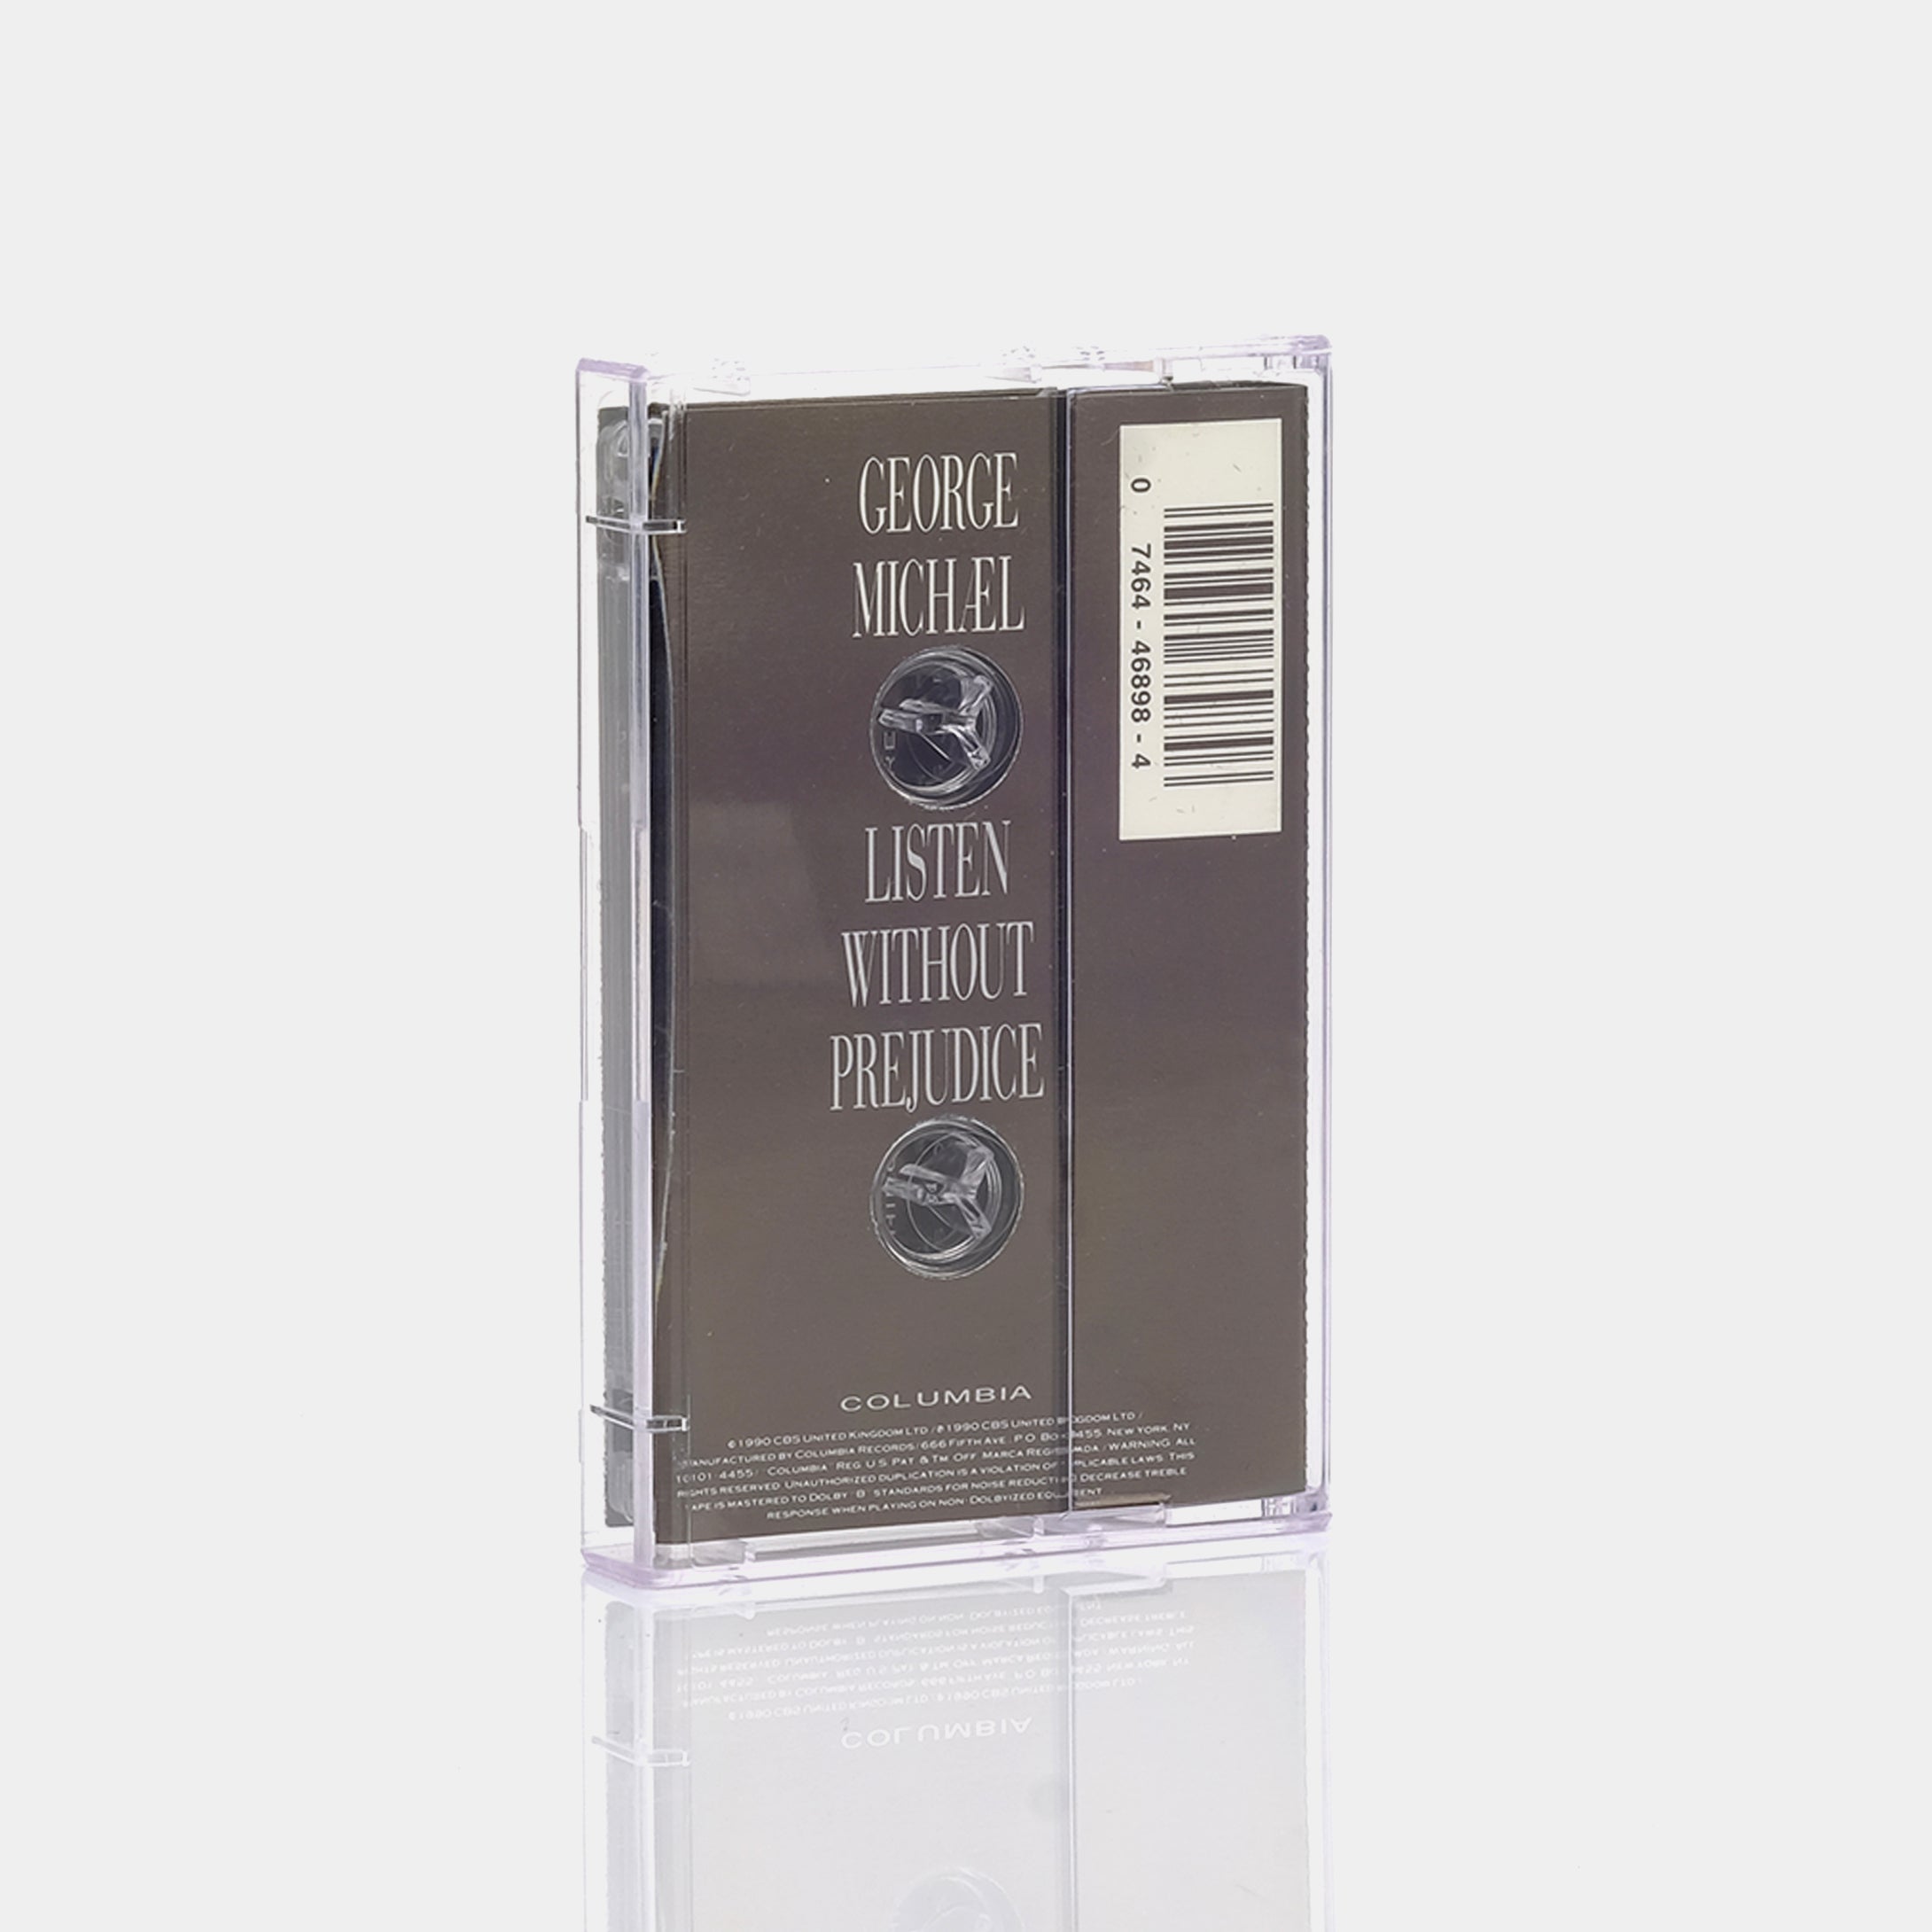 George Michael - Listen Without Prejudice Cassette Tape